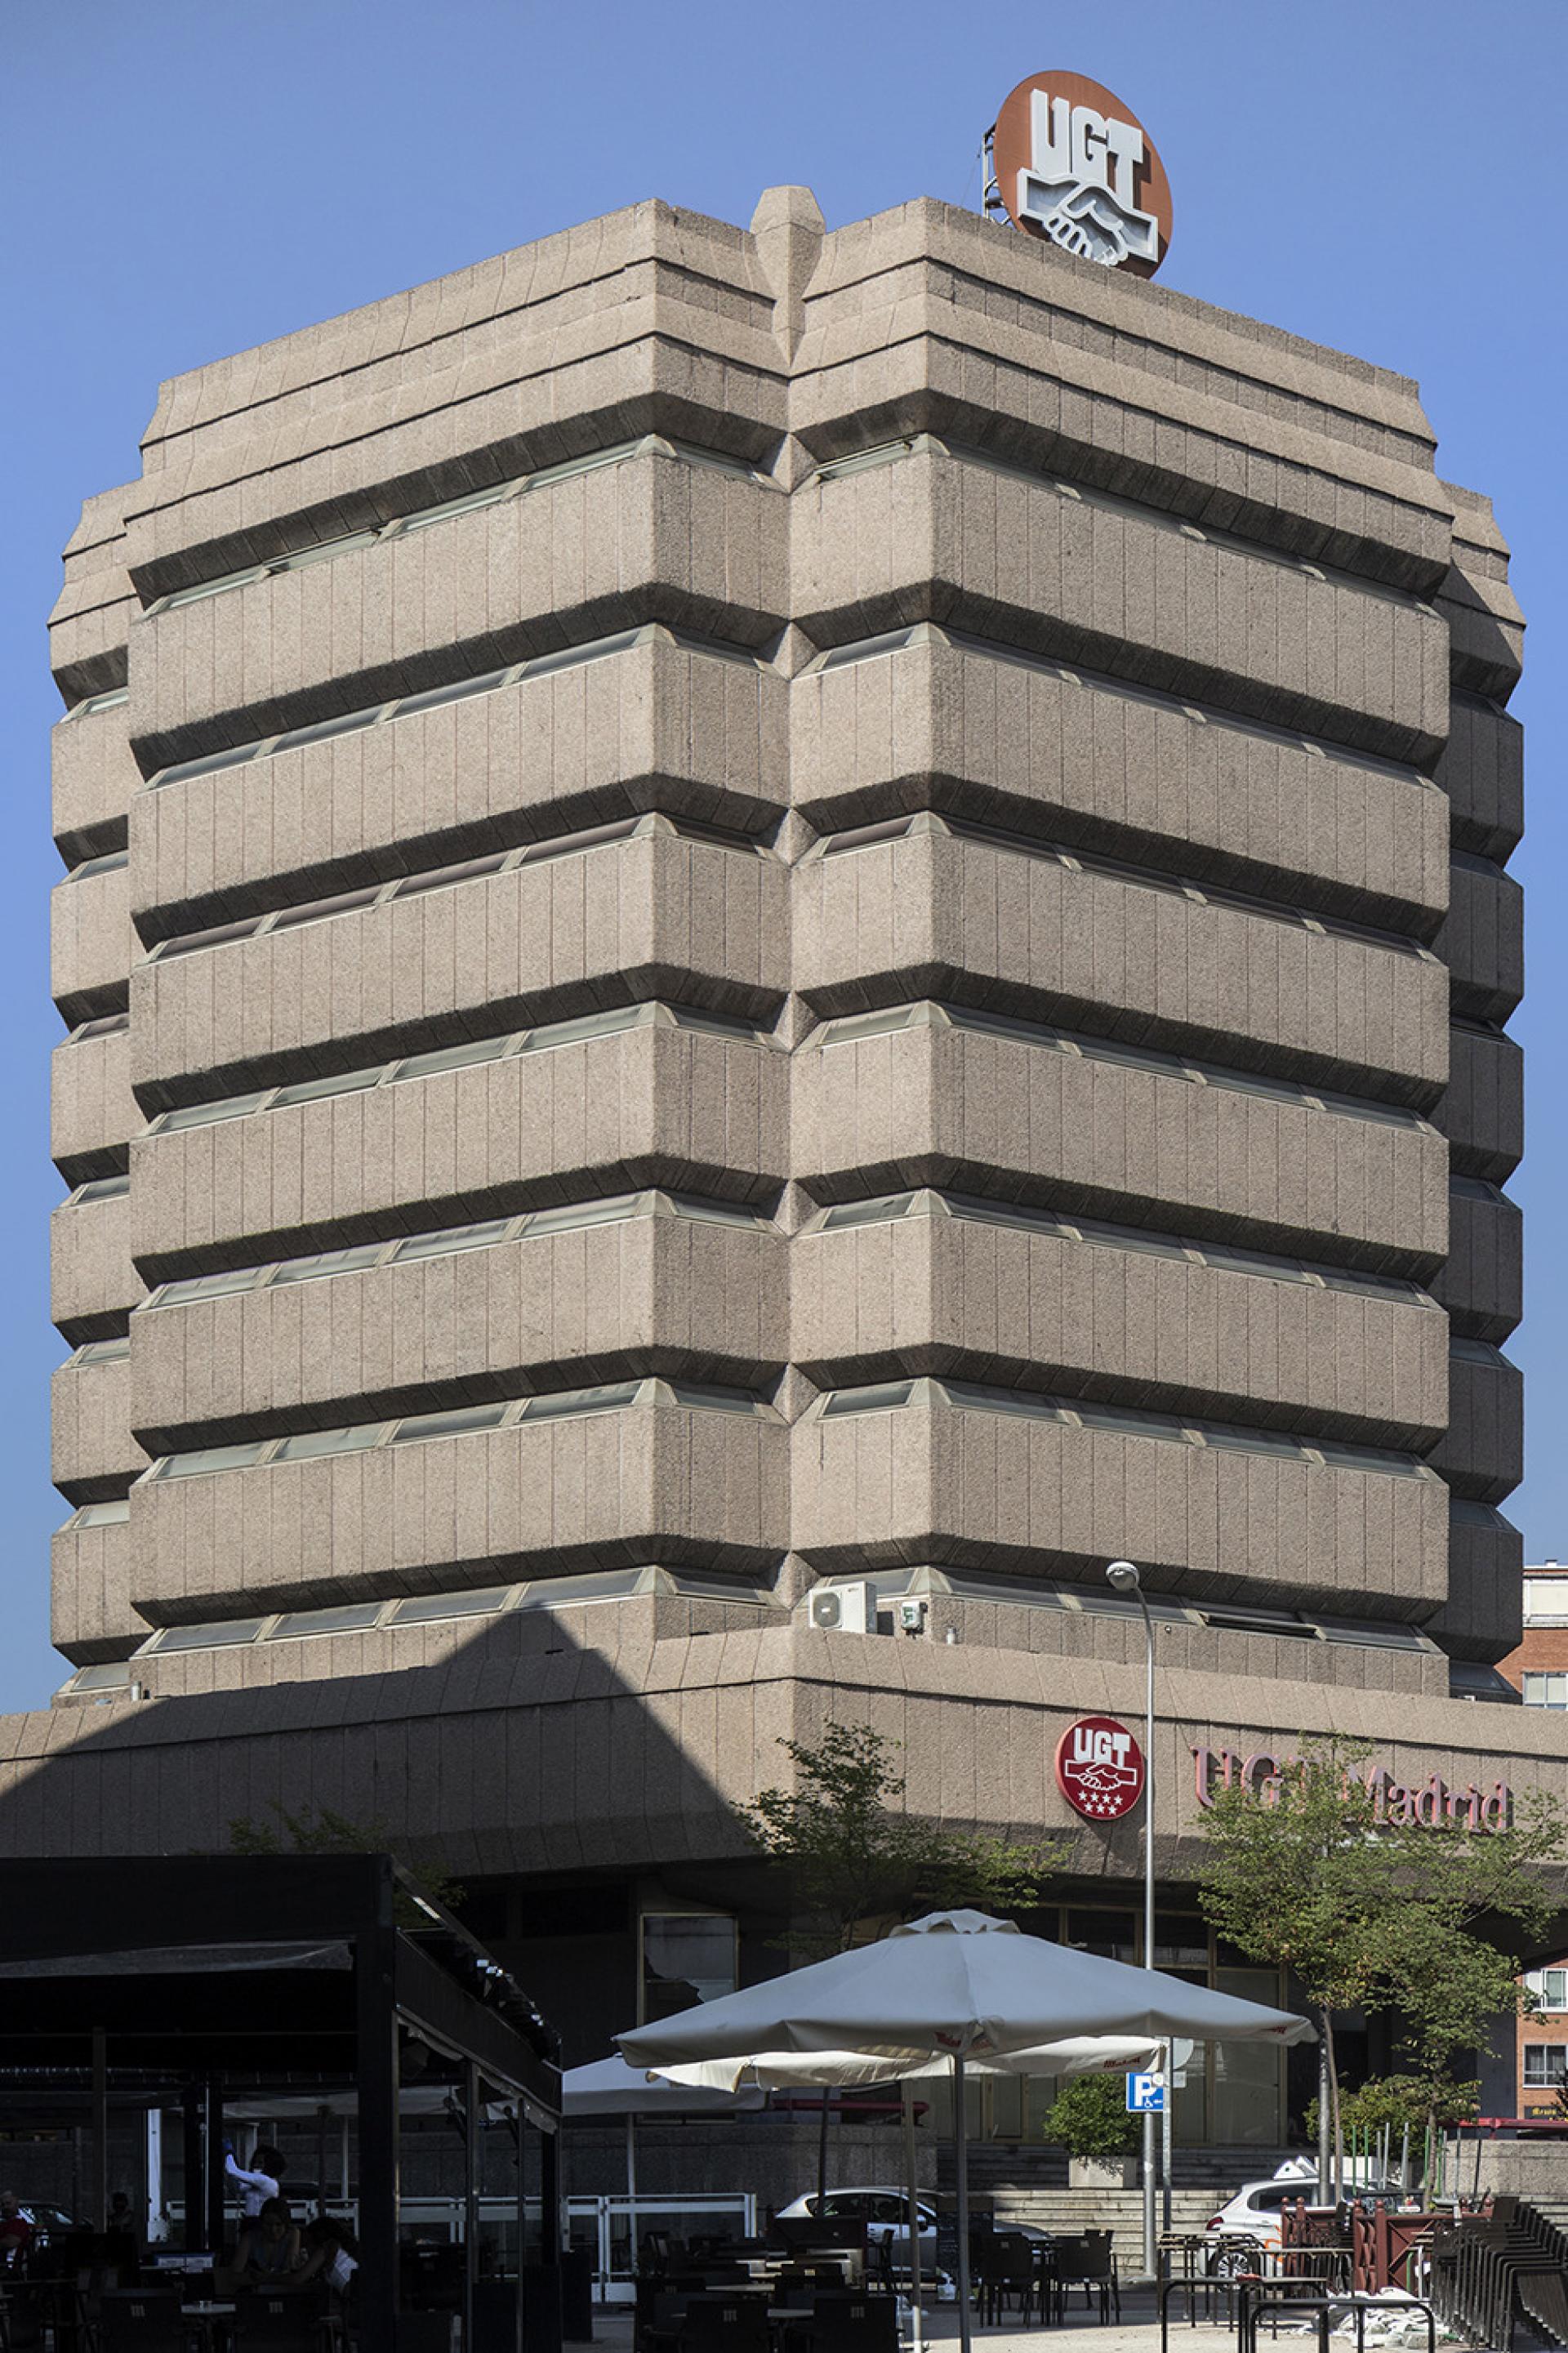 Headquarters of UGT trade union by Antonio Vallejo Acevedo (1977)